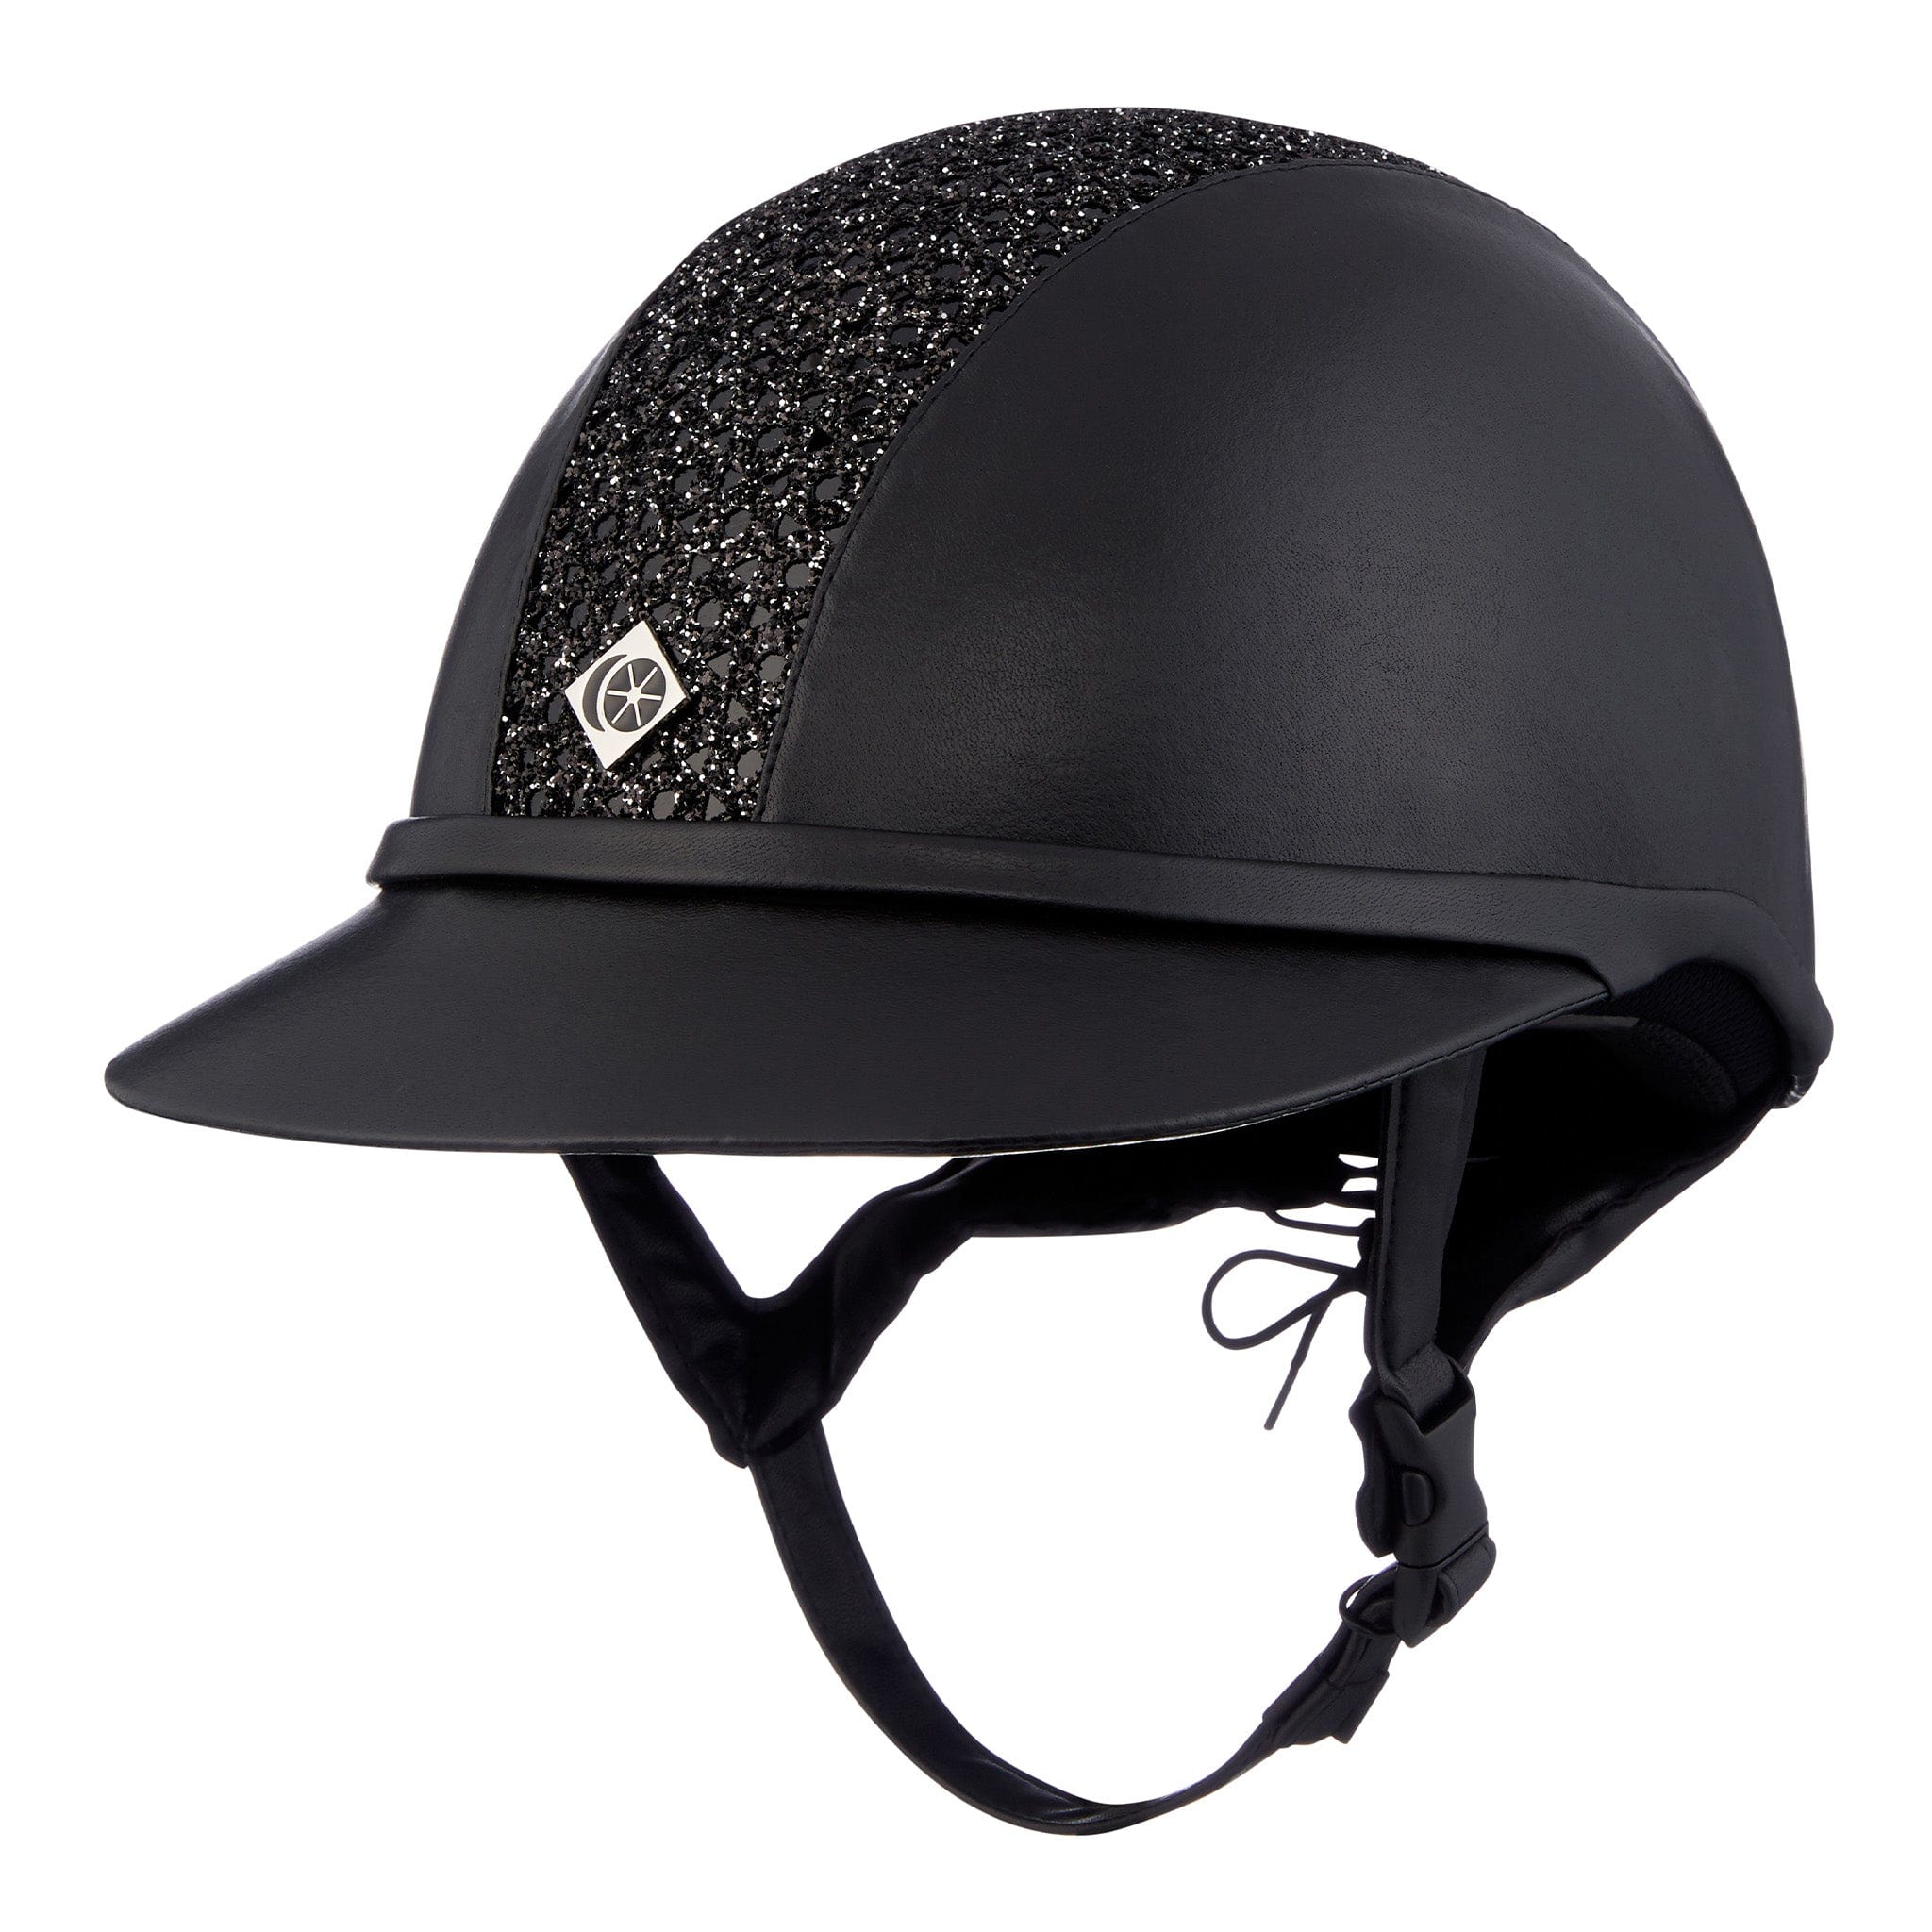 Charles Owen SP8 Plus Sparkly Leather Look Riding Hat Studio Black BBSLLSP8PLUS658